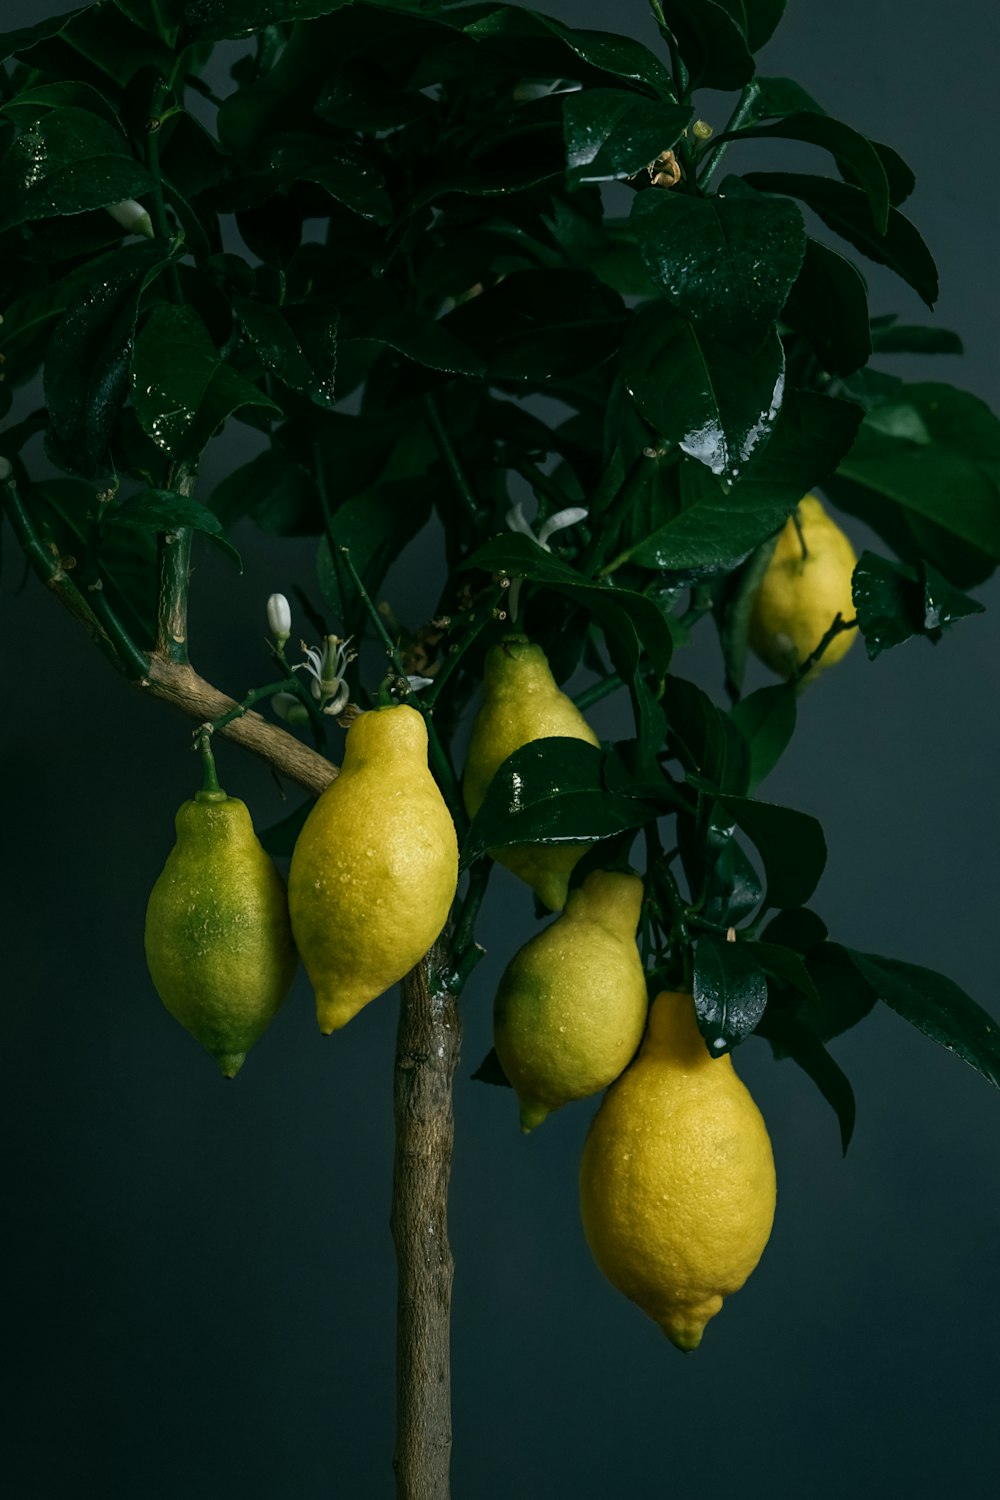 yellow lemon fruit on tree